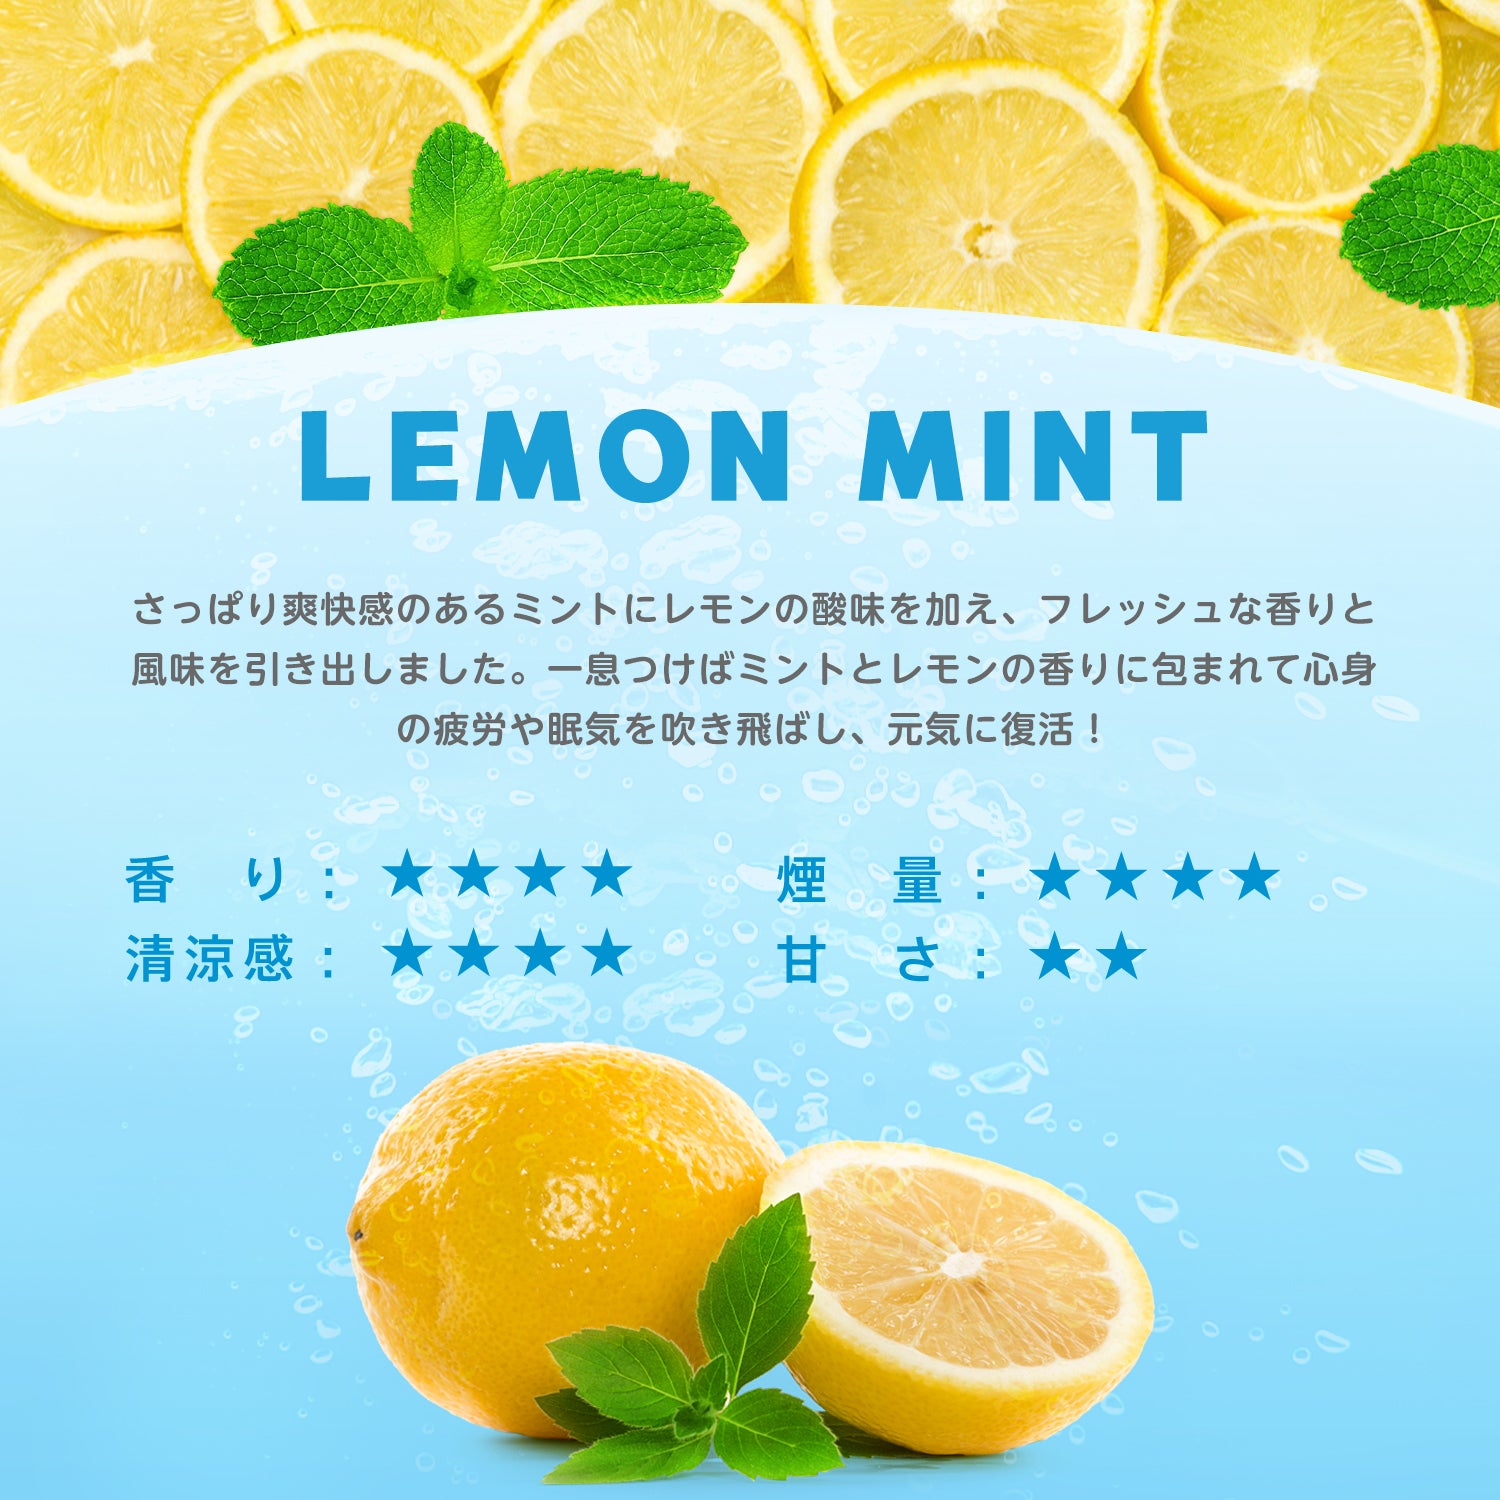 NICOCO Disposable Electronic Cigarettes Set of 5 (Lemon Mint Menthol)